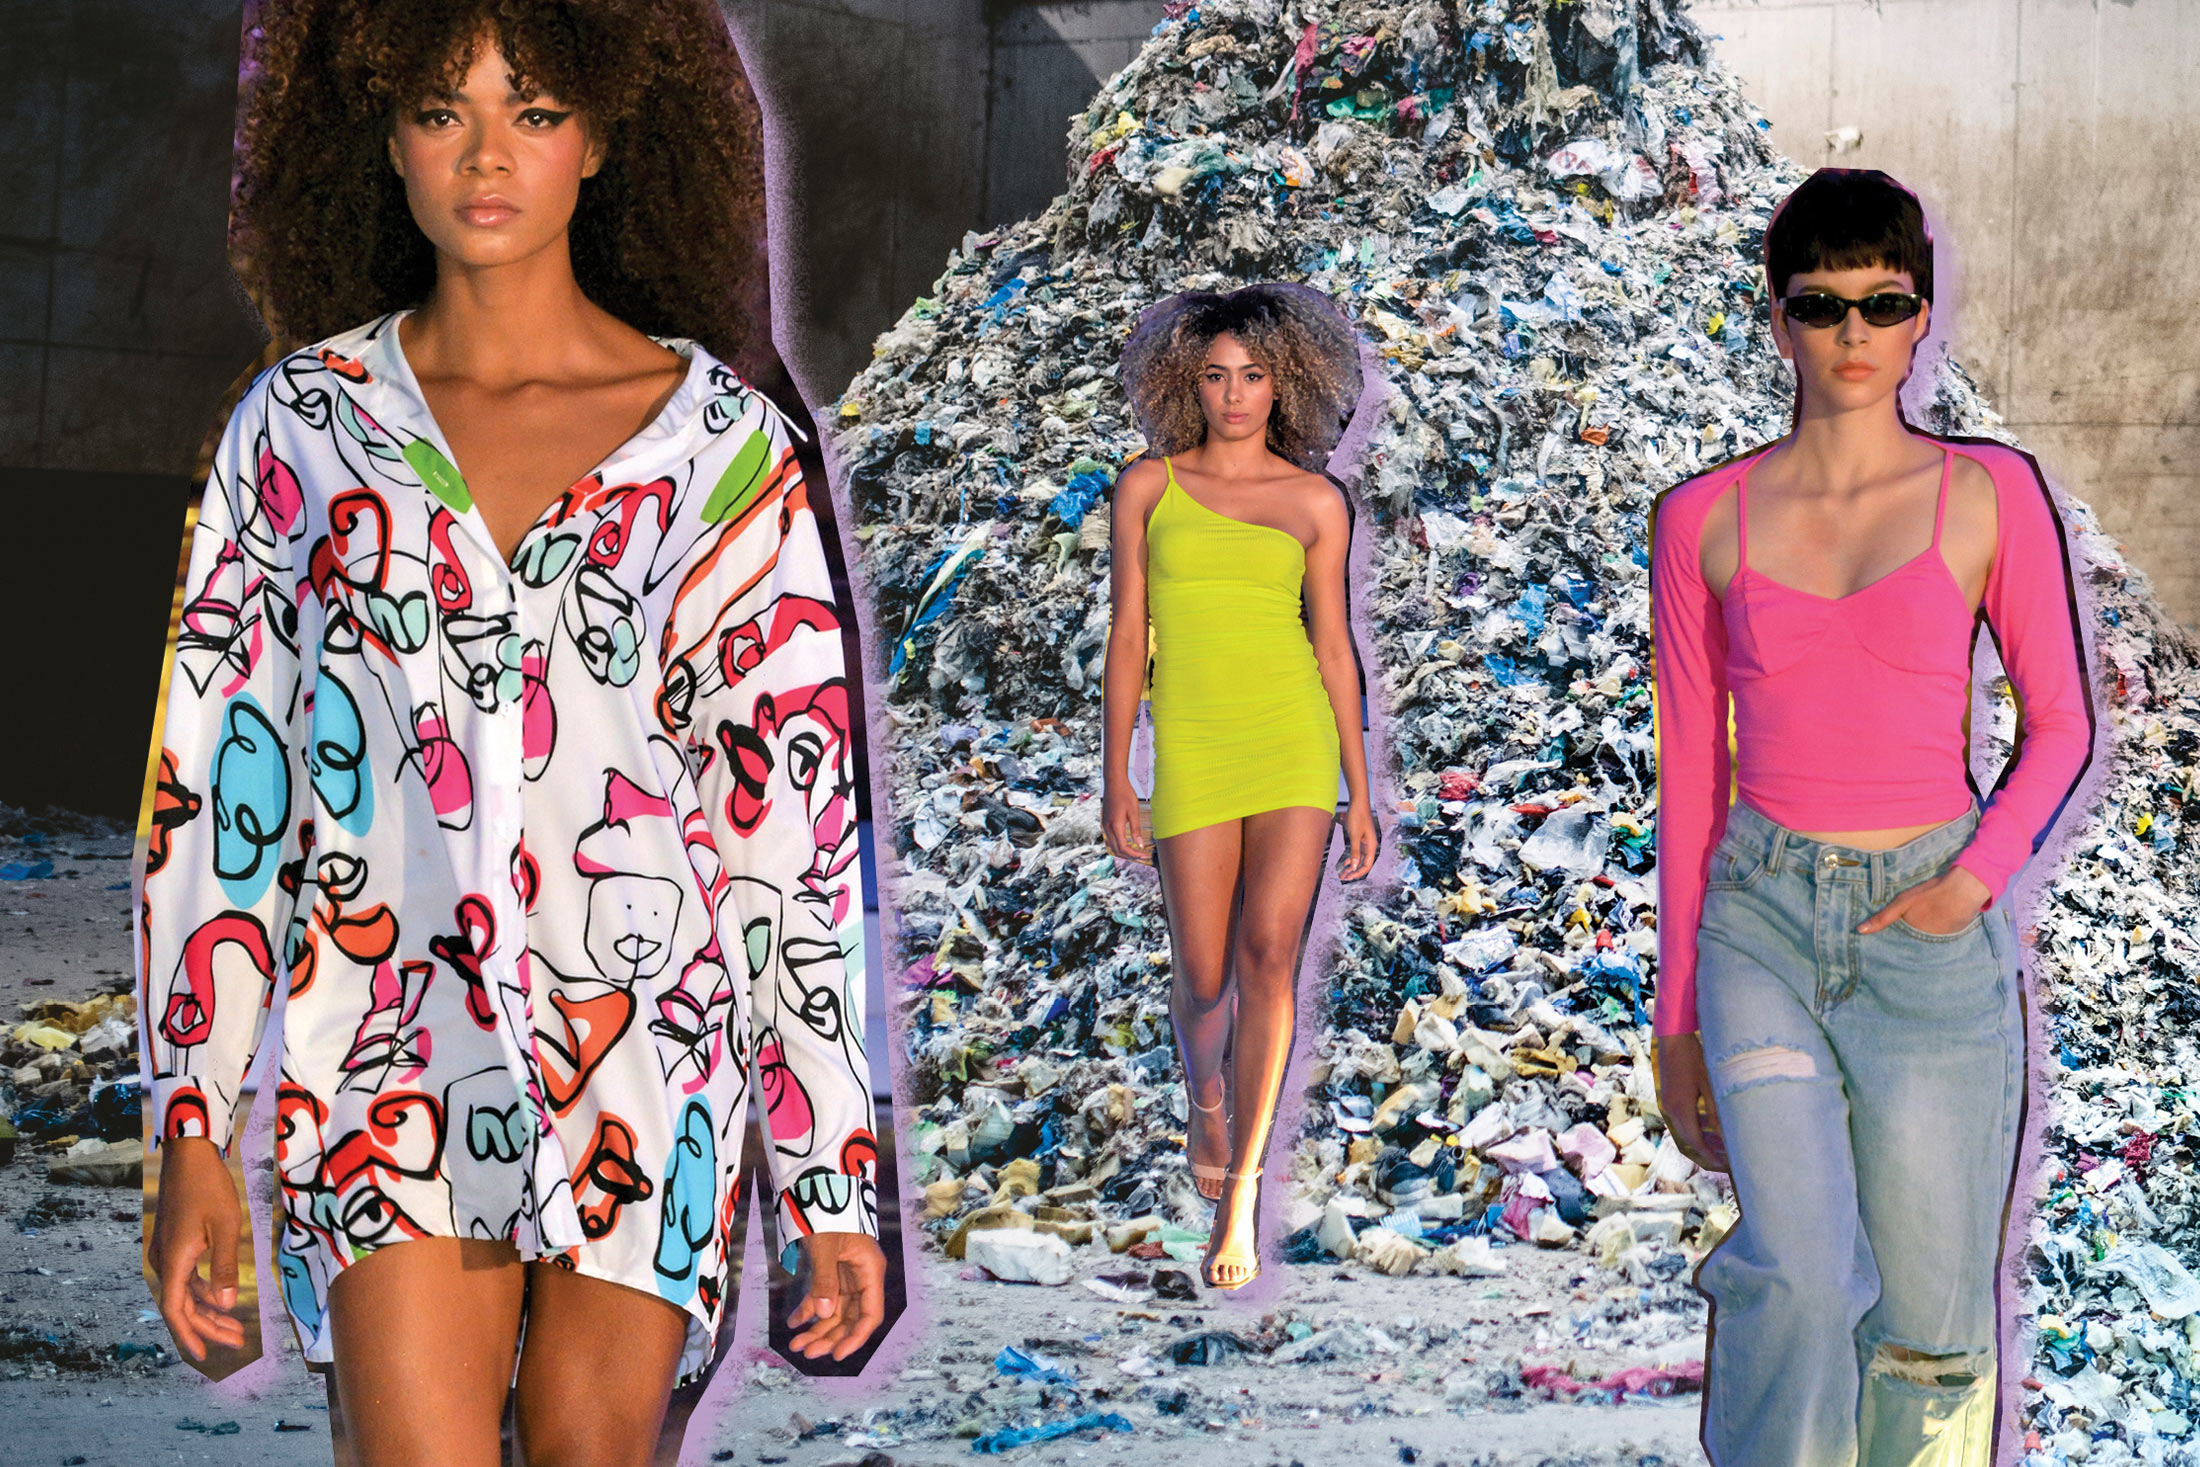 Shein, fast fashion's infernal machine, opens Paris pop-up amid controversy